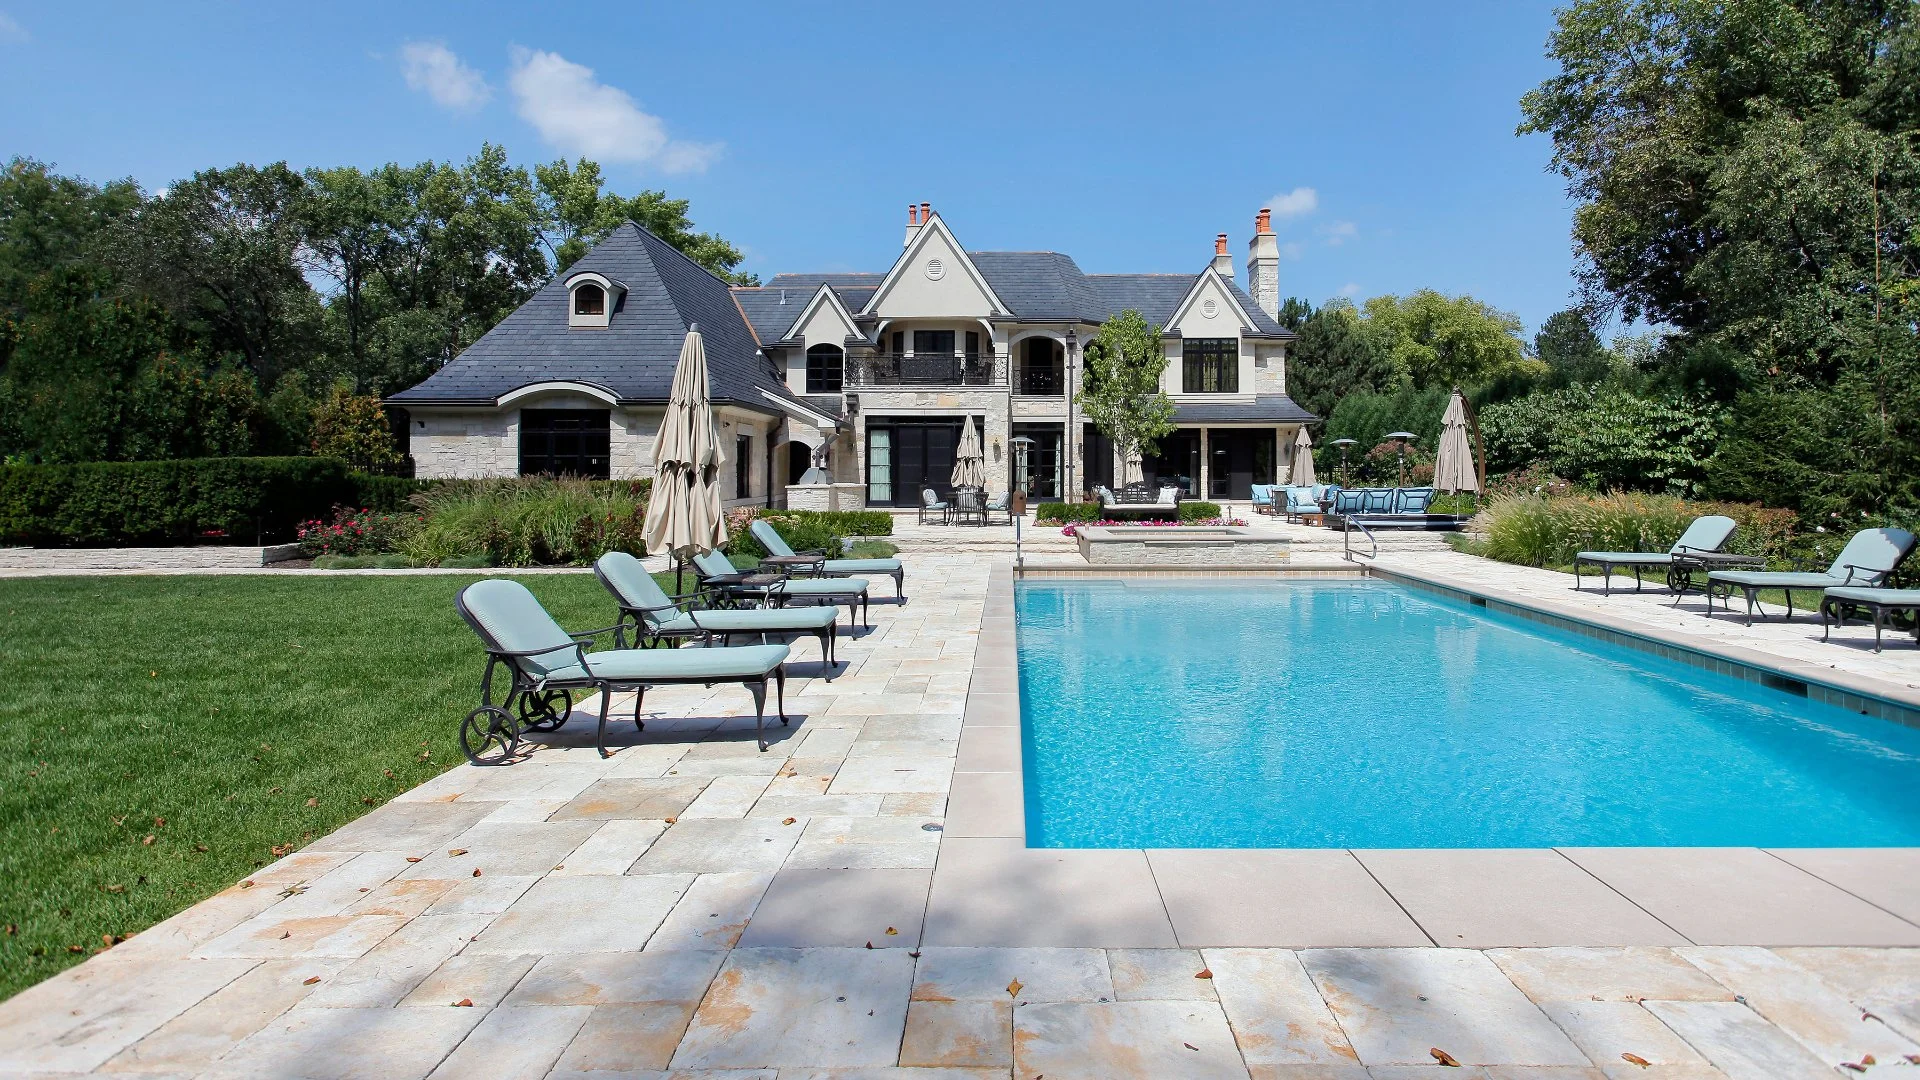 Large pool home in Bridgehampton, NY with beautiful pool deck.